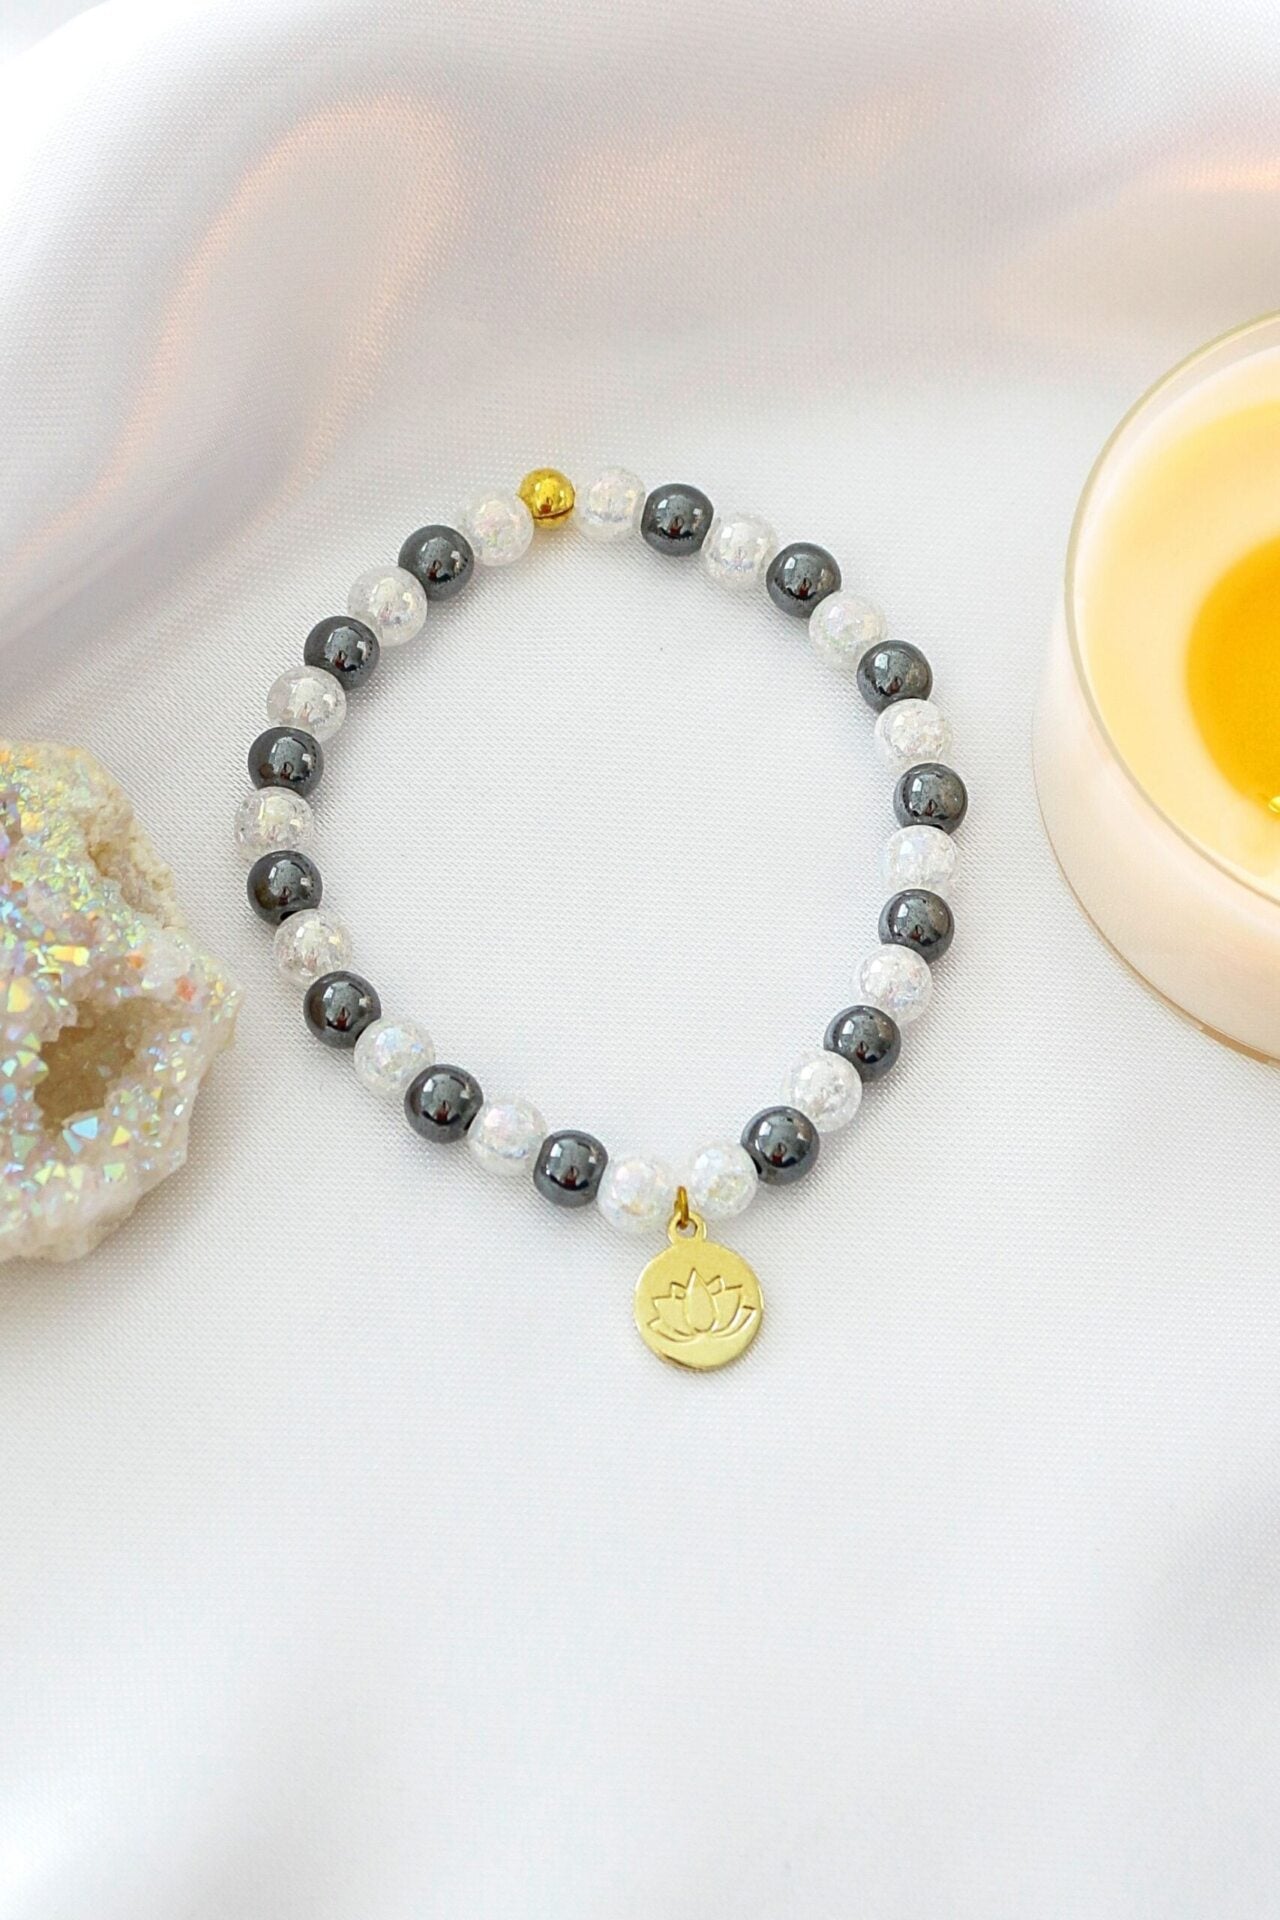 24K Lotus Flower Hematite Bracelet - Protective and Stylish Amulet for Everyday Wear Bijou Her